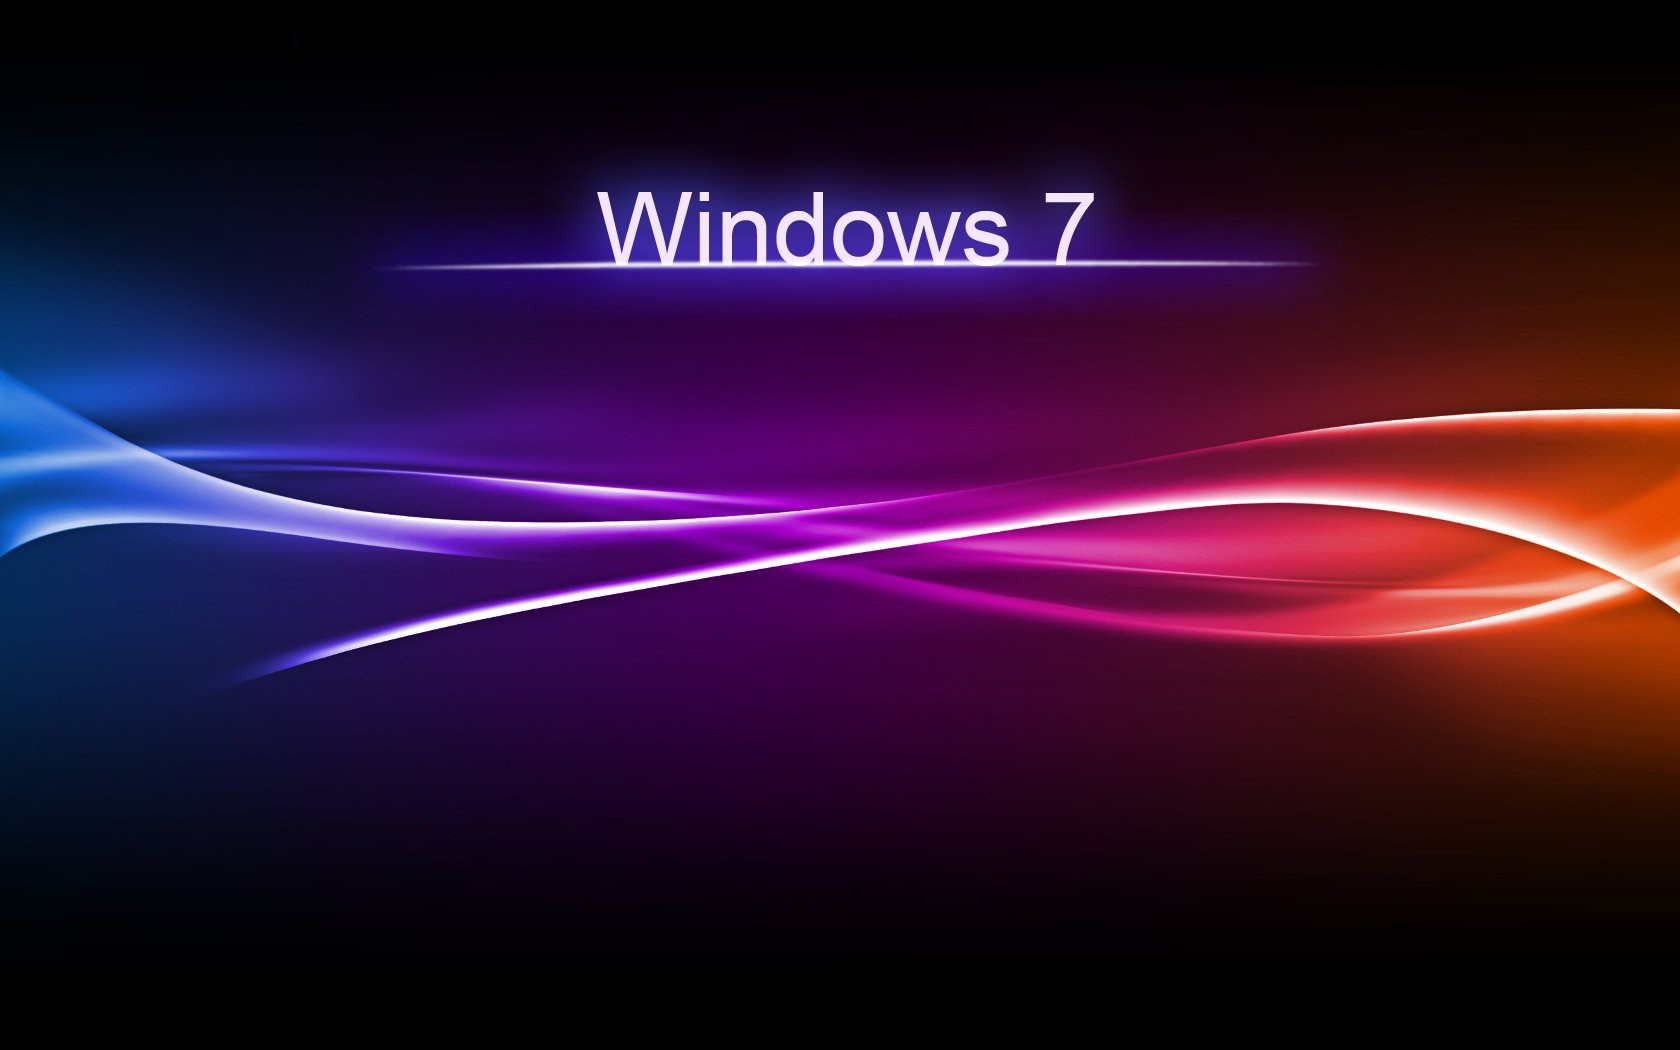 Windows 7 Pro Wallpapers / Windows 7 Professional Wallpaper Hd ...